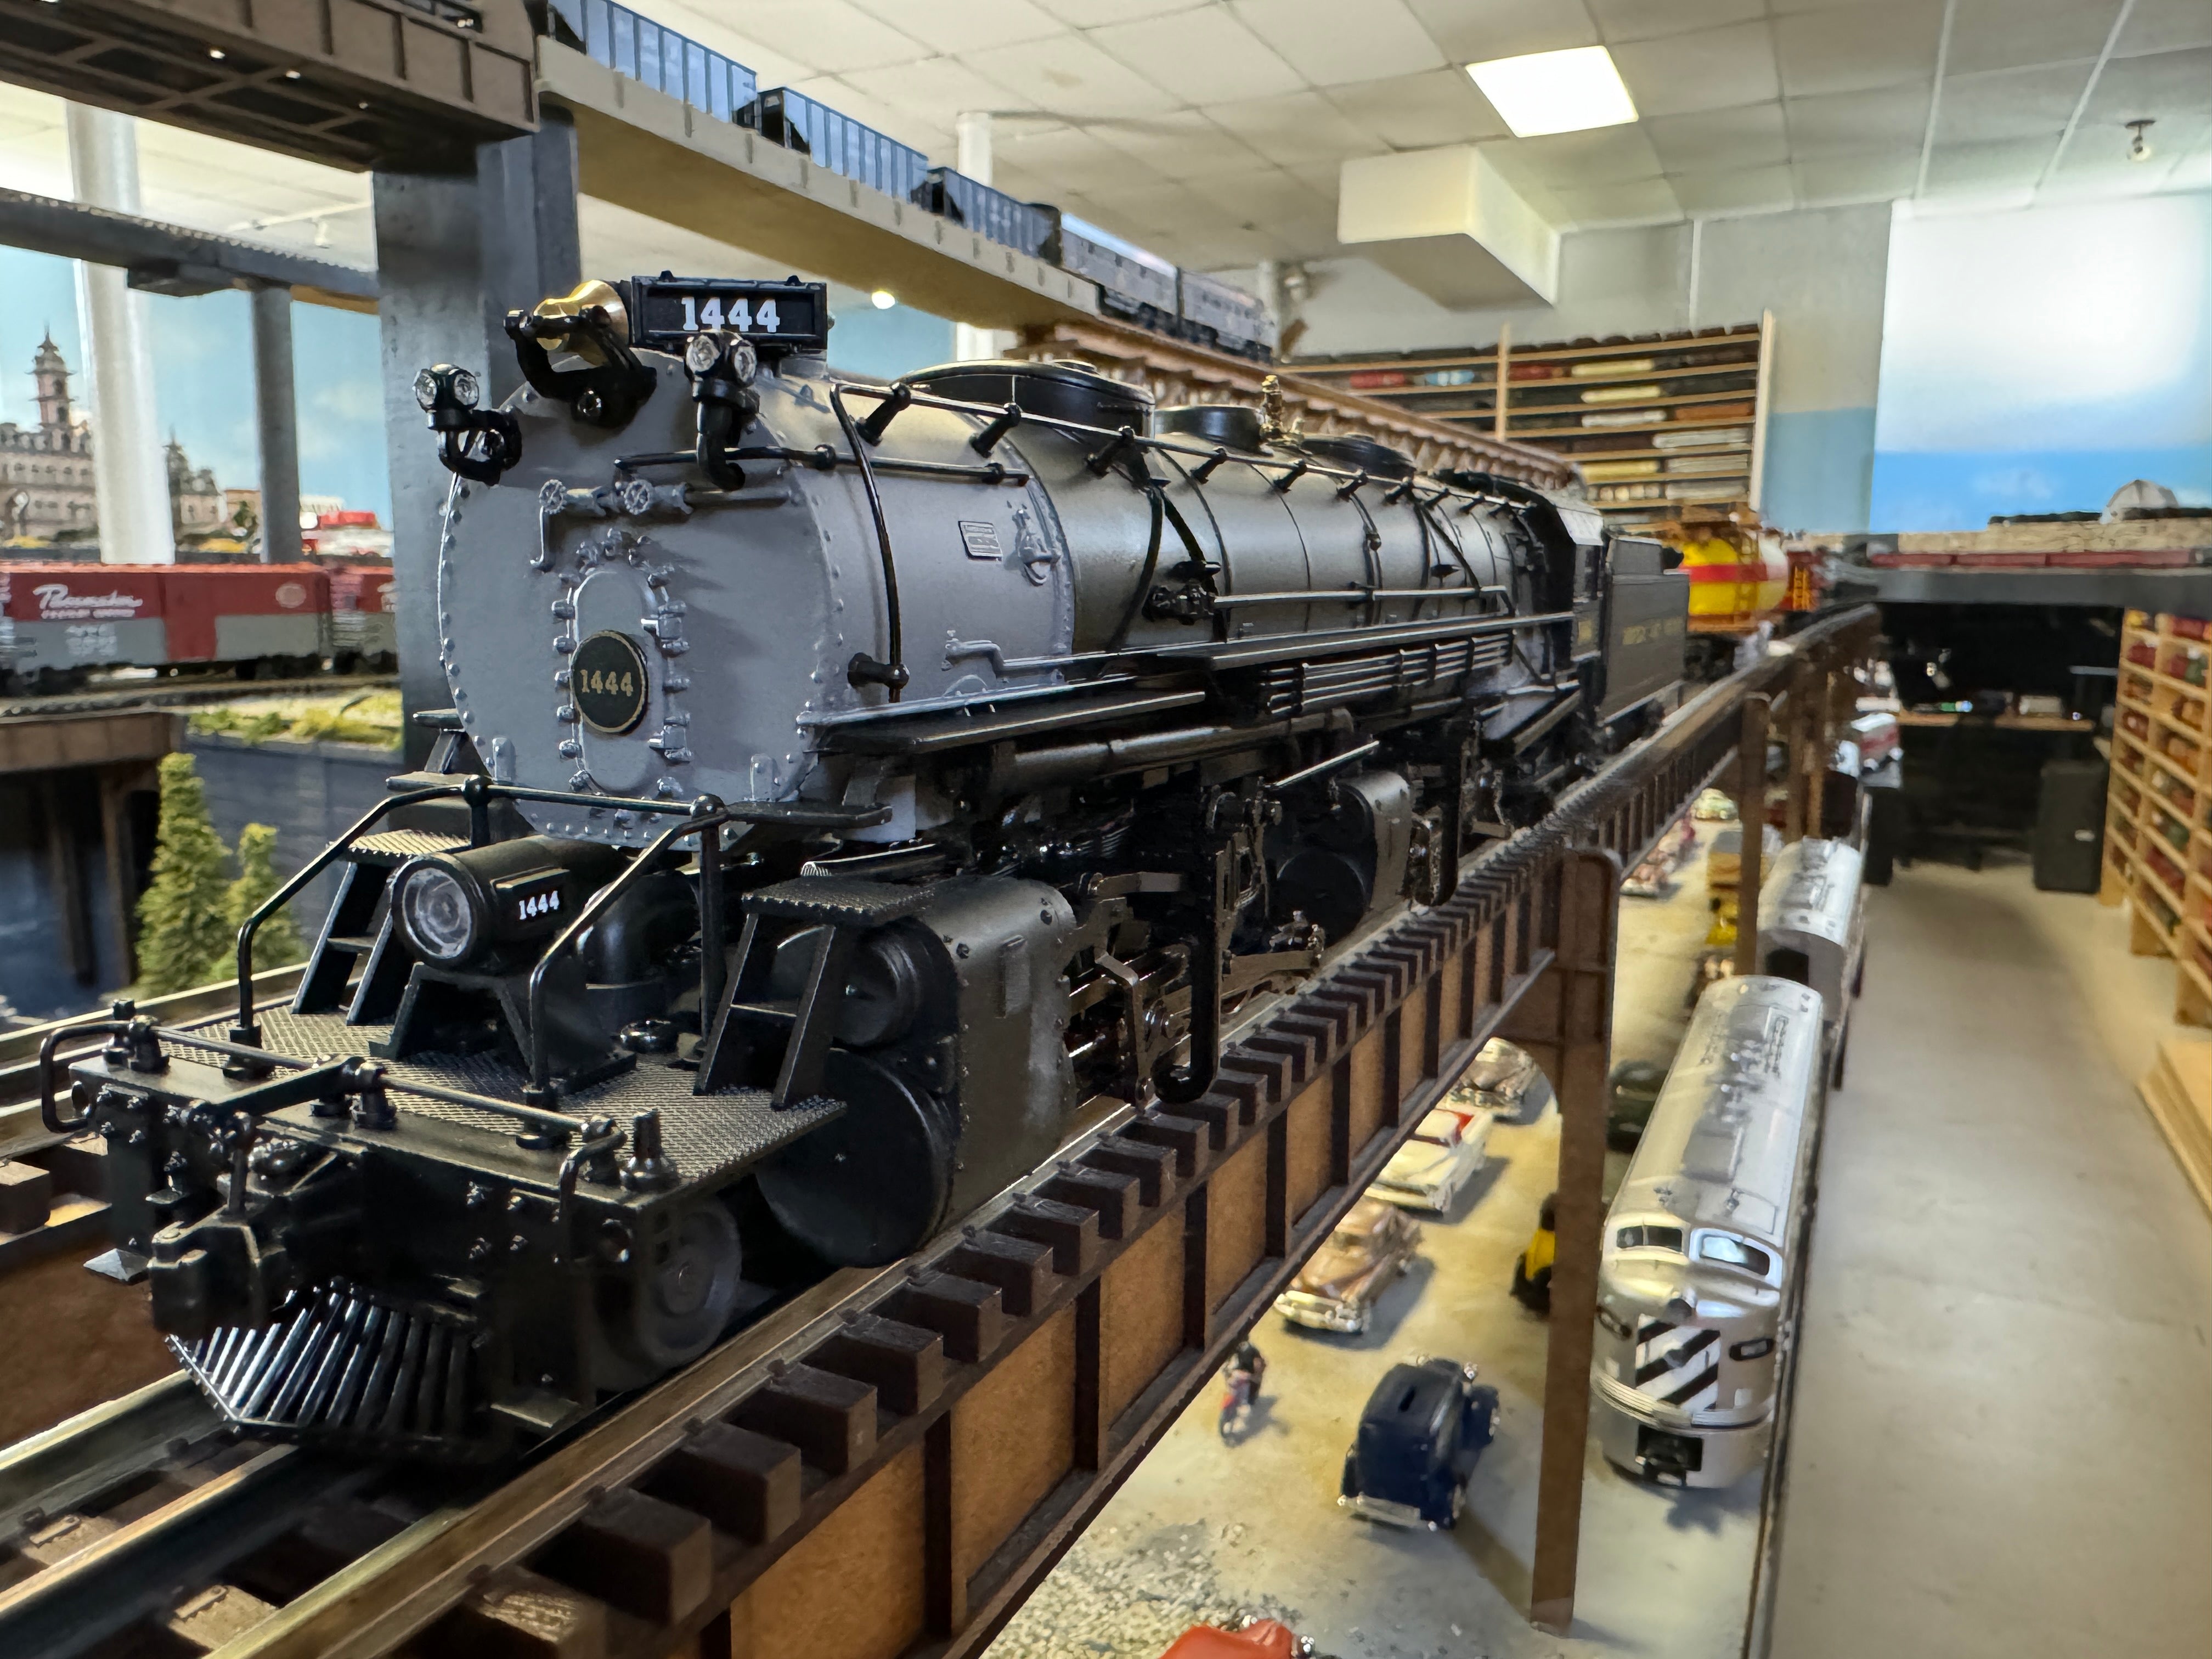 Lionel 2431820 - Legacy 2-6-6-2 Steam Engine "Norfolk & Western" #1444 - Custom Run for MrMuffin'sTrains